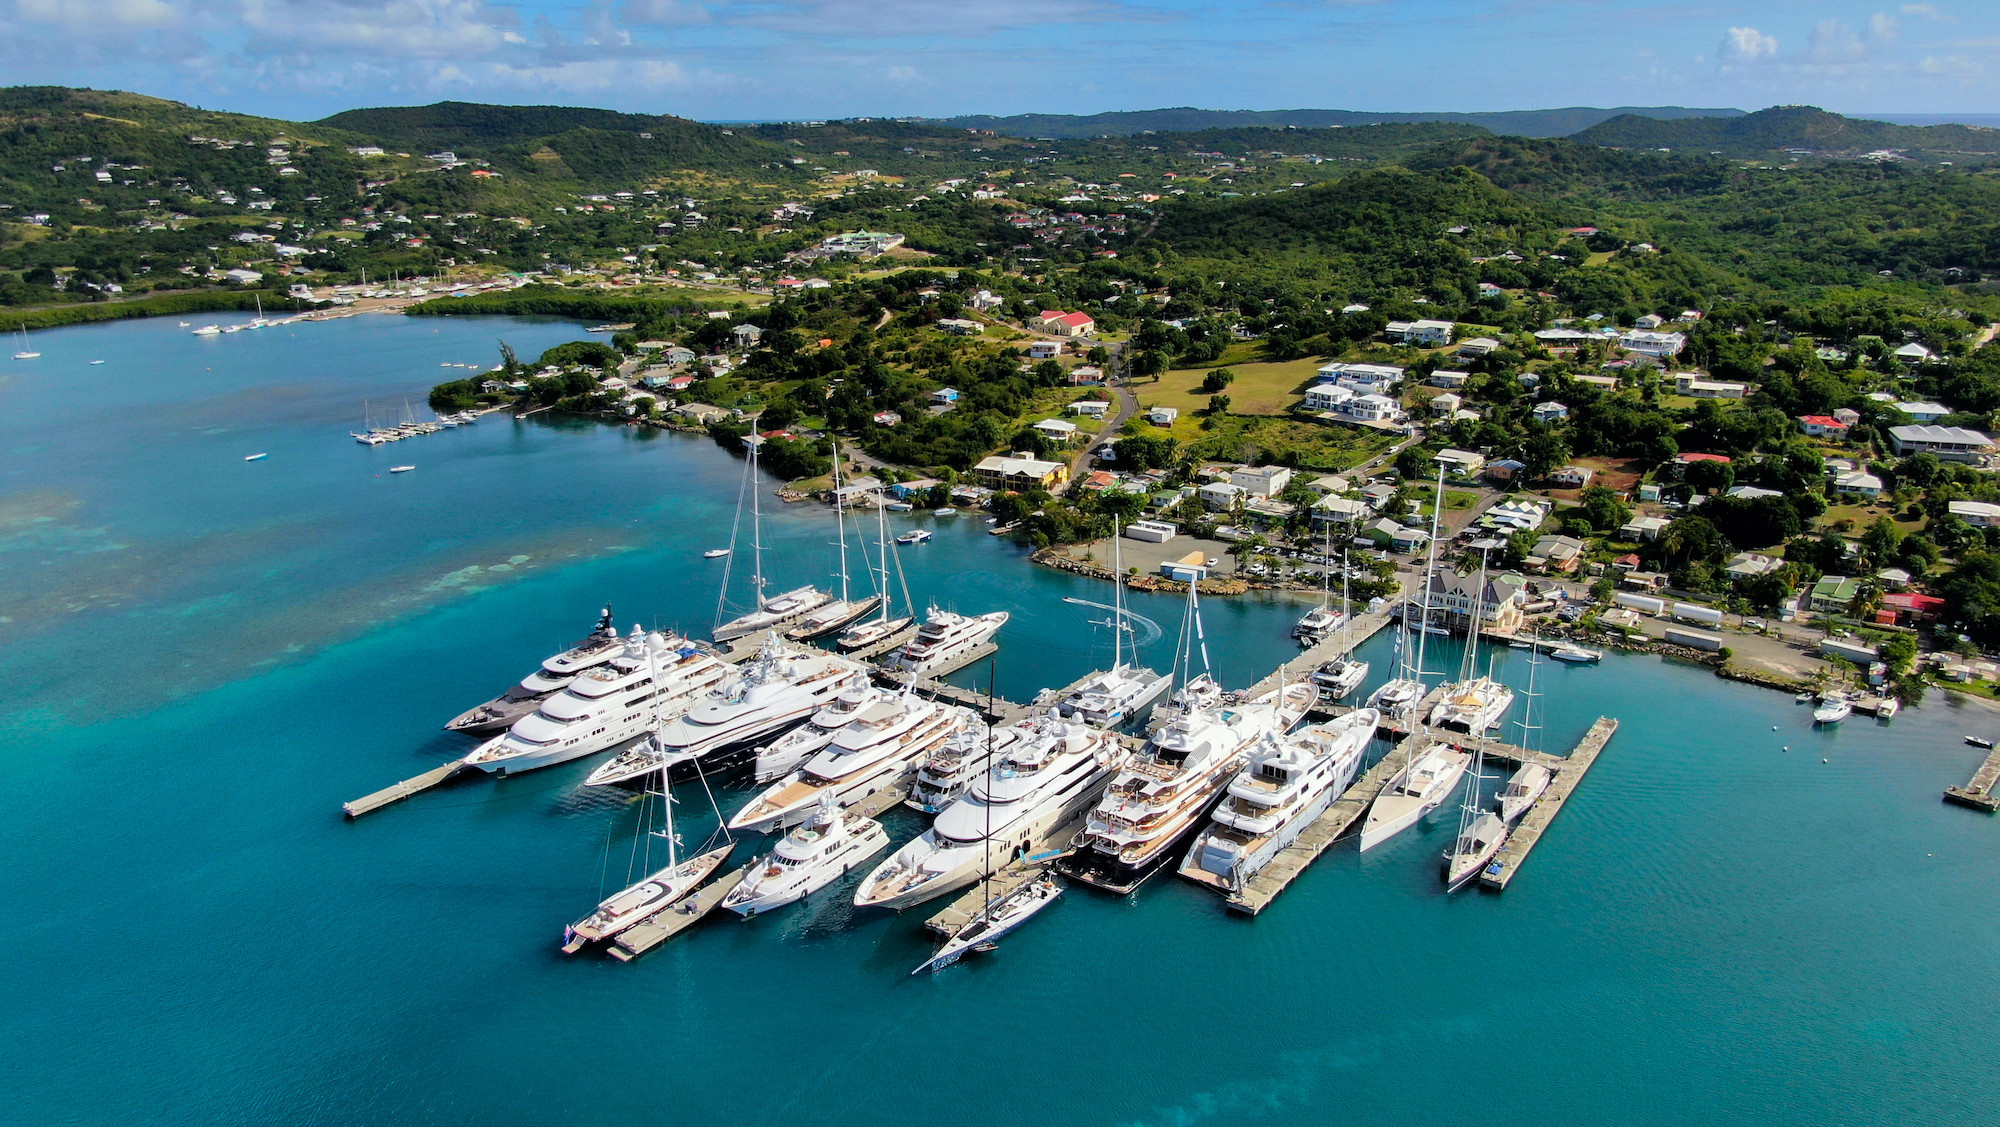 Antigua to host Diamond Edition of Antigua Charter Yacht Show Antigua